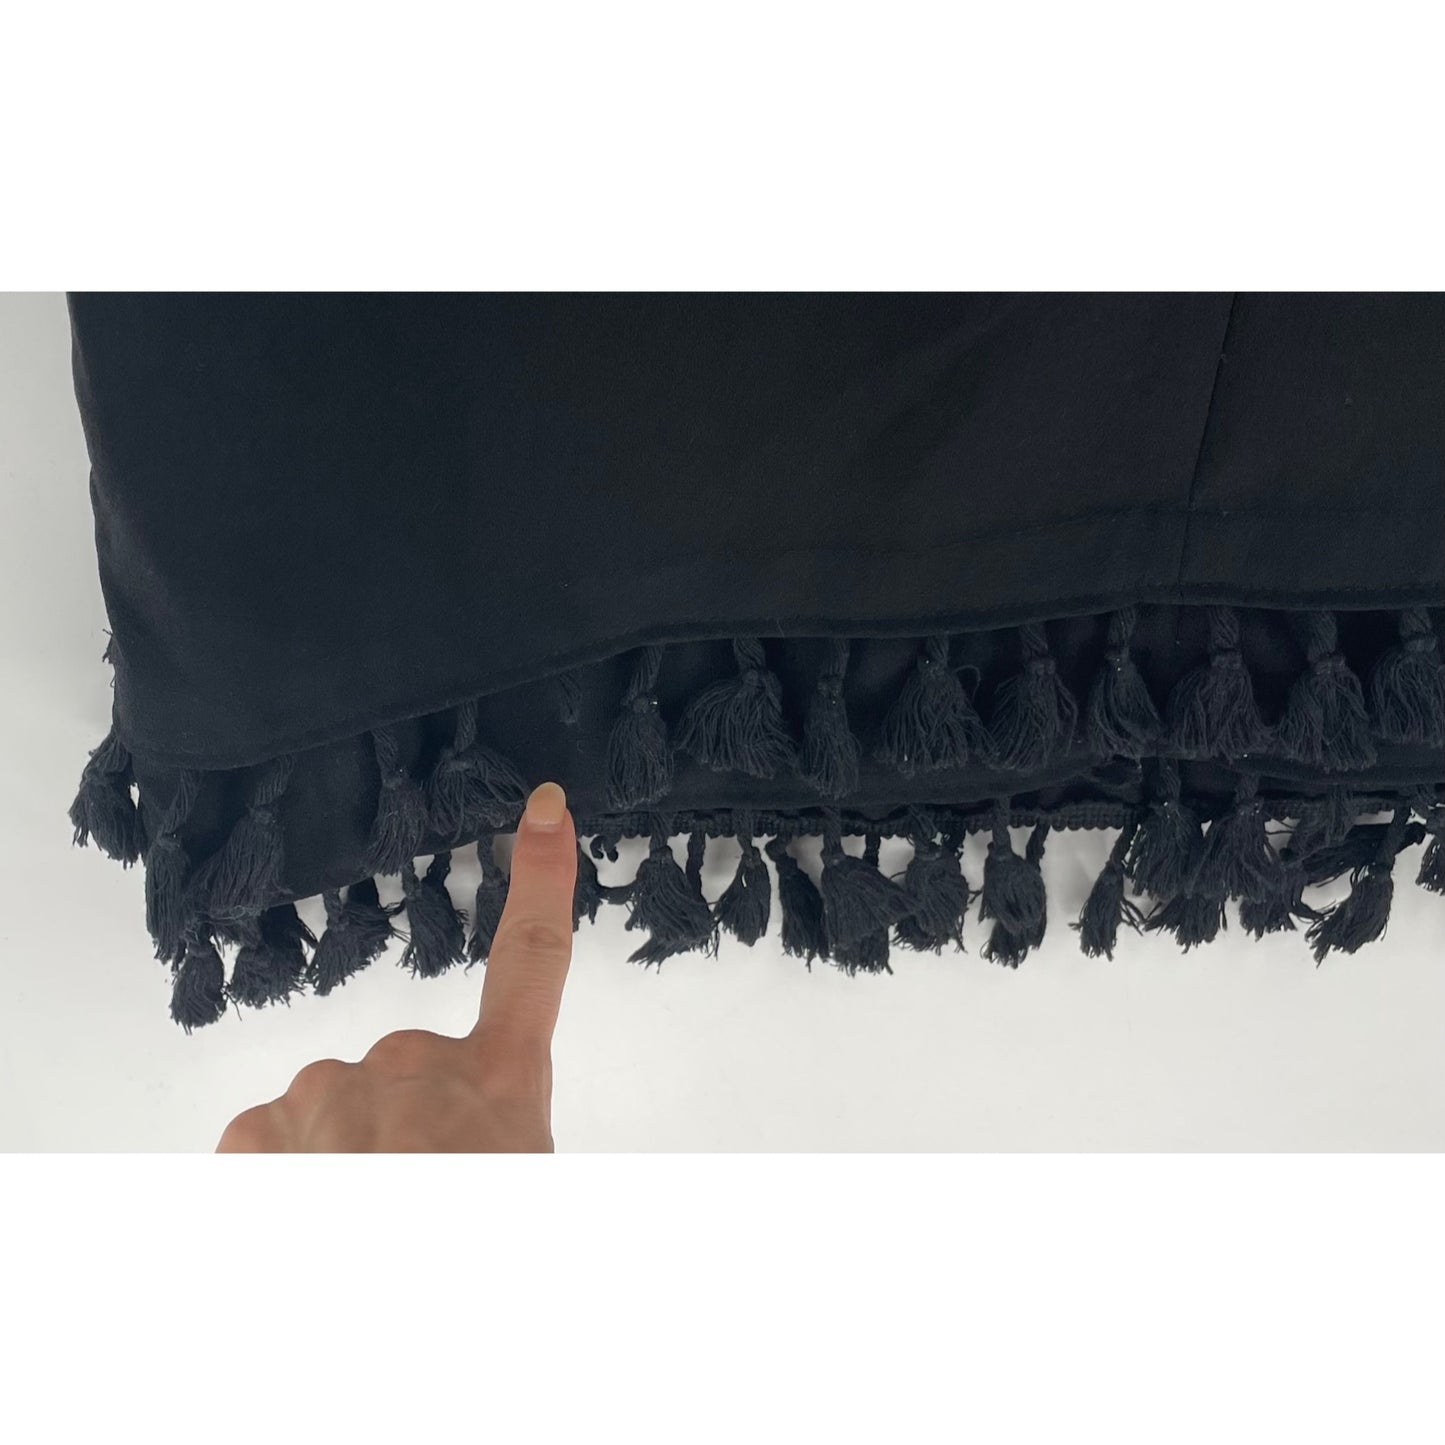 Zara Women's Size Medium Black Short-Sleeved Sheath Dress W/ Fringe Tassel Hem